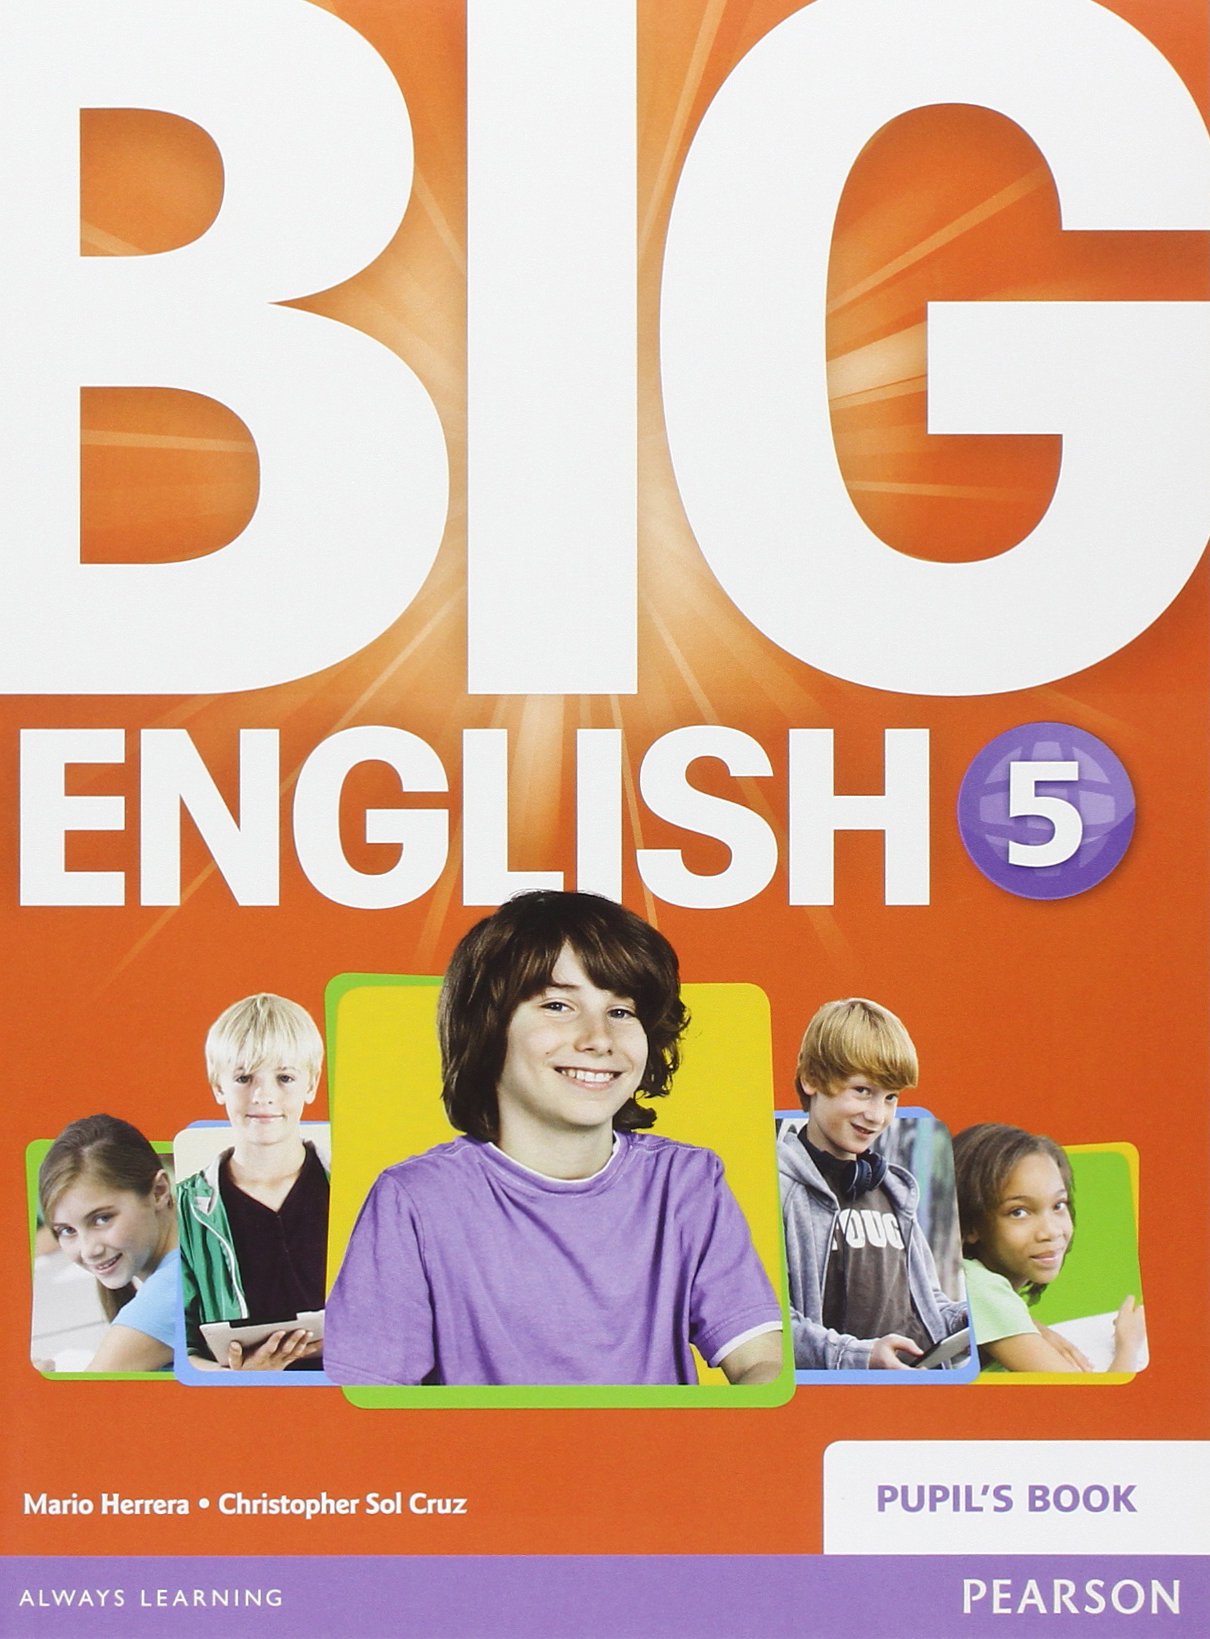 Book is big. Big English учебник. English 5. Биг Инглиш. Big English 5 класс.